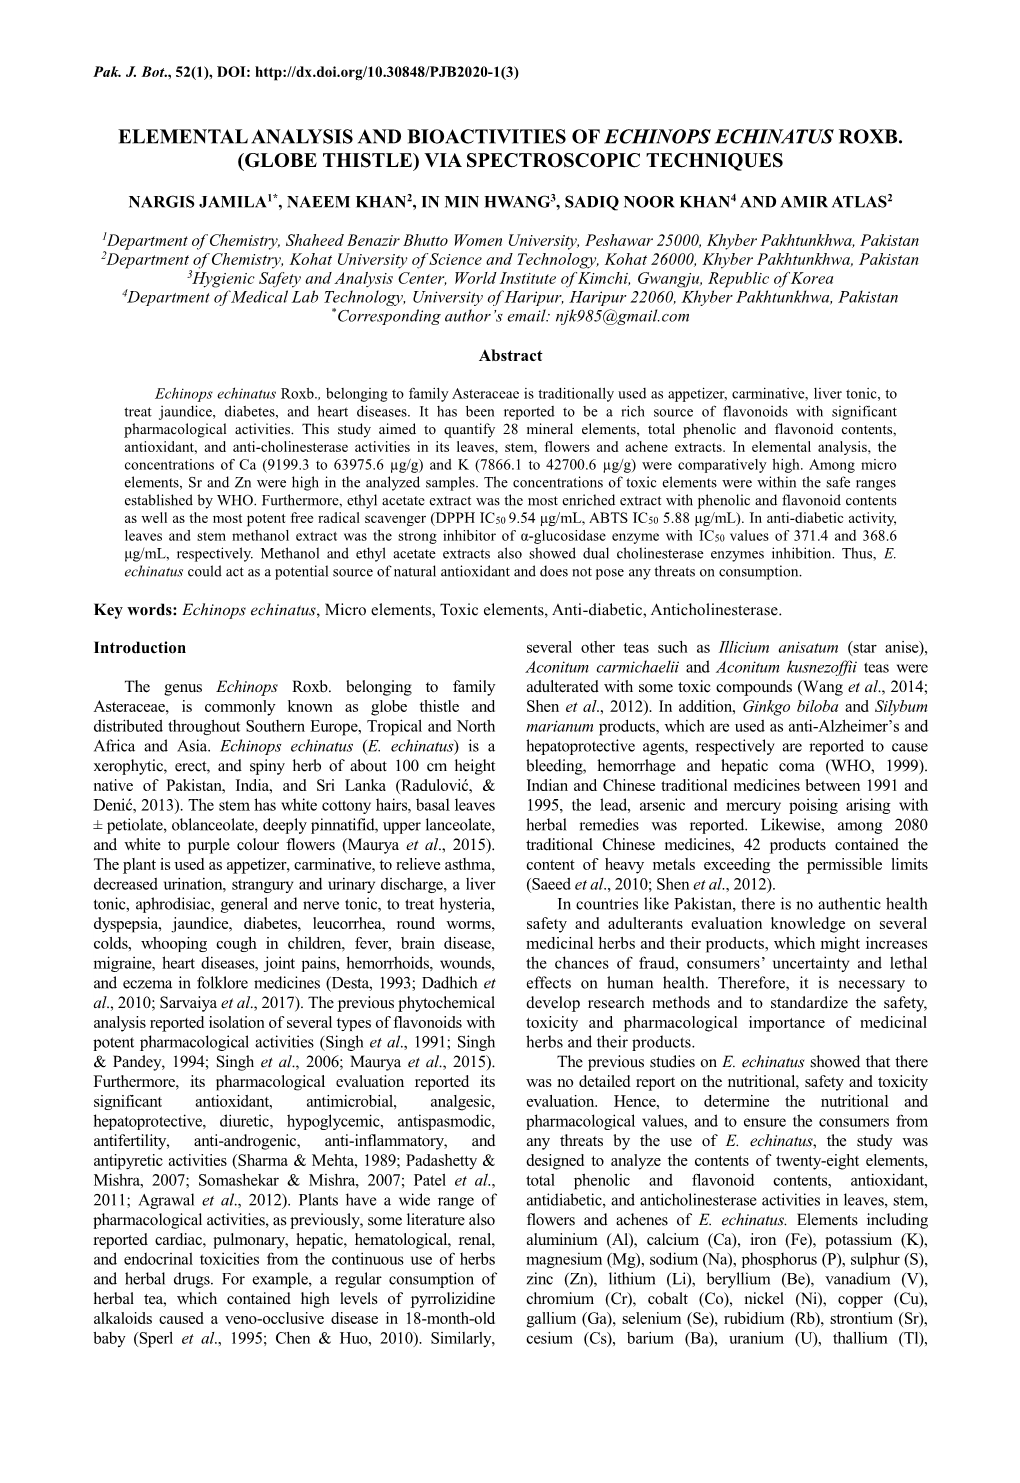 Elemental Analysis and Bioactivities of Echinops Echinatus Roxb. (Globe Thistle) Via Spectroscopic Techniques